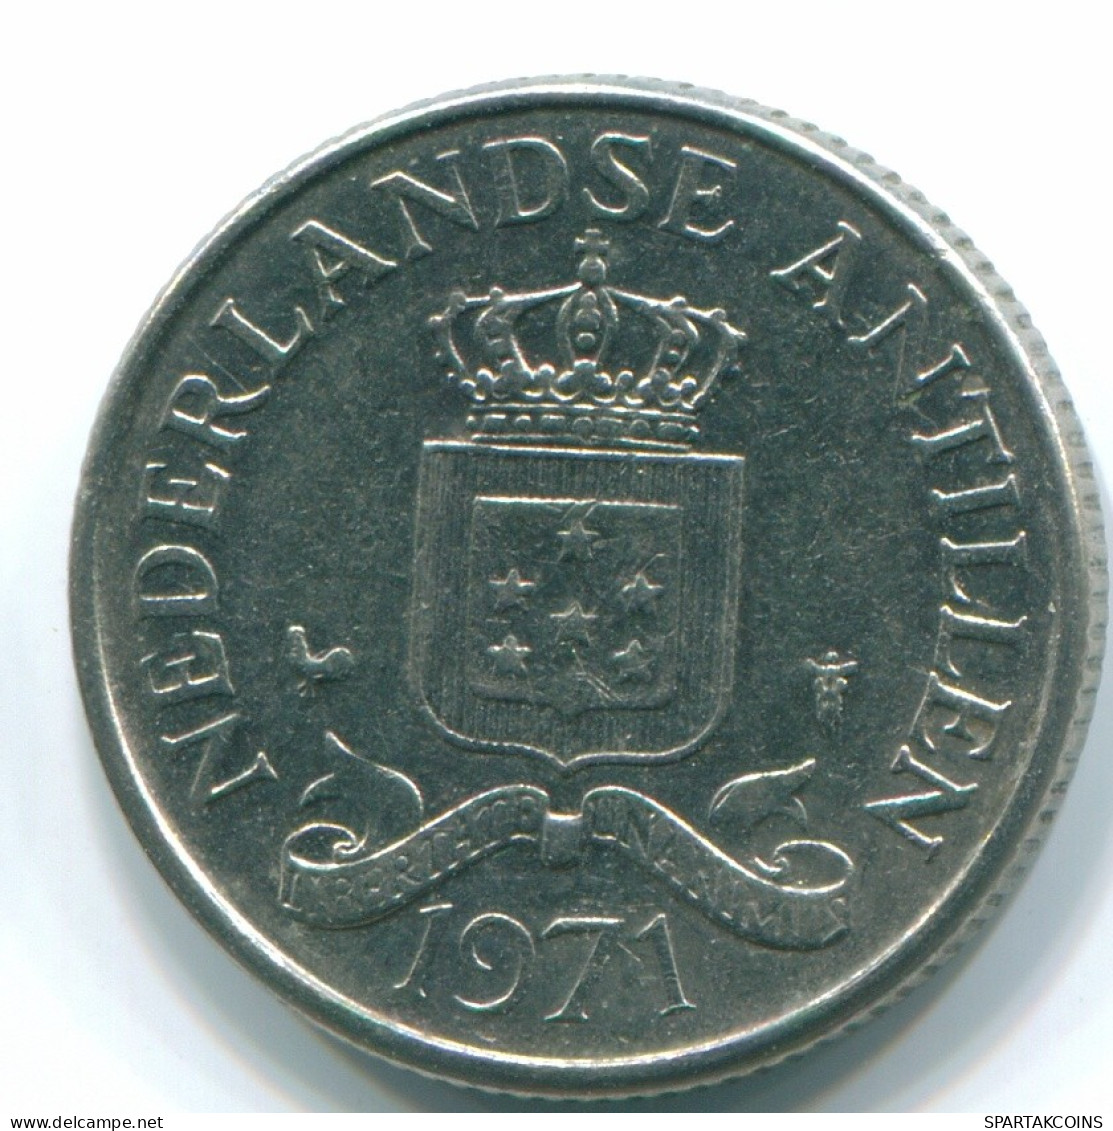 25 CENTS 1971 NETHERLANDS ANTILLES Nickel Colonial Coin #S11503.U.A - Antilles Néerlandaises